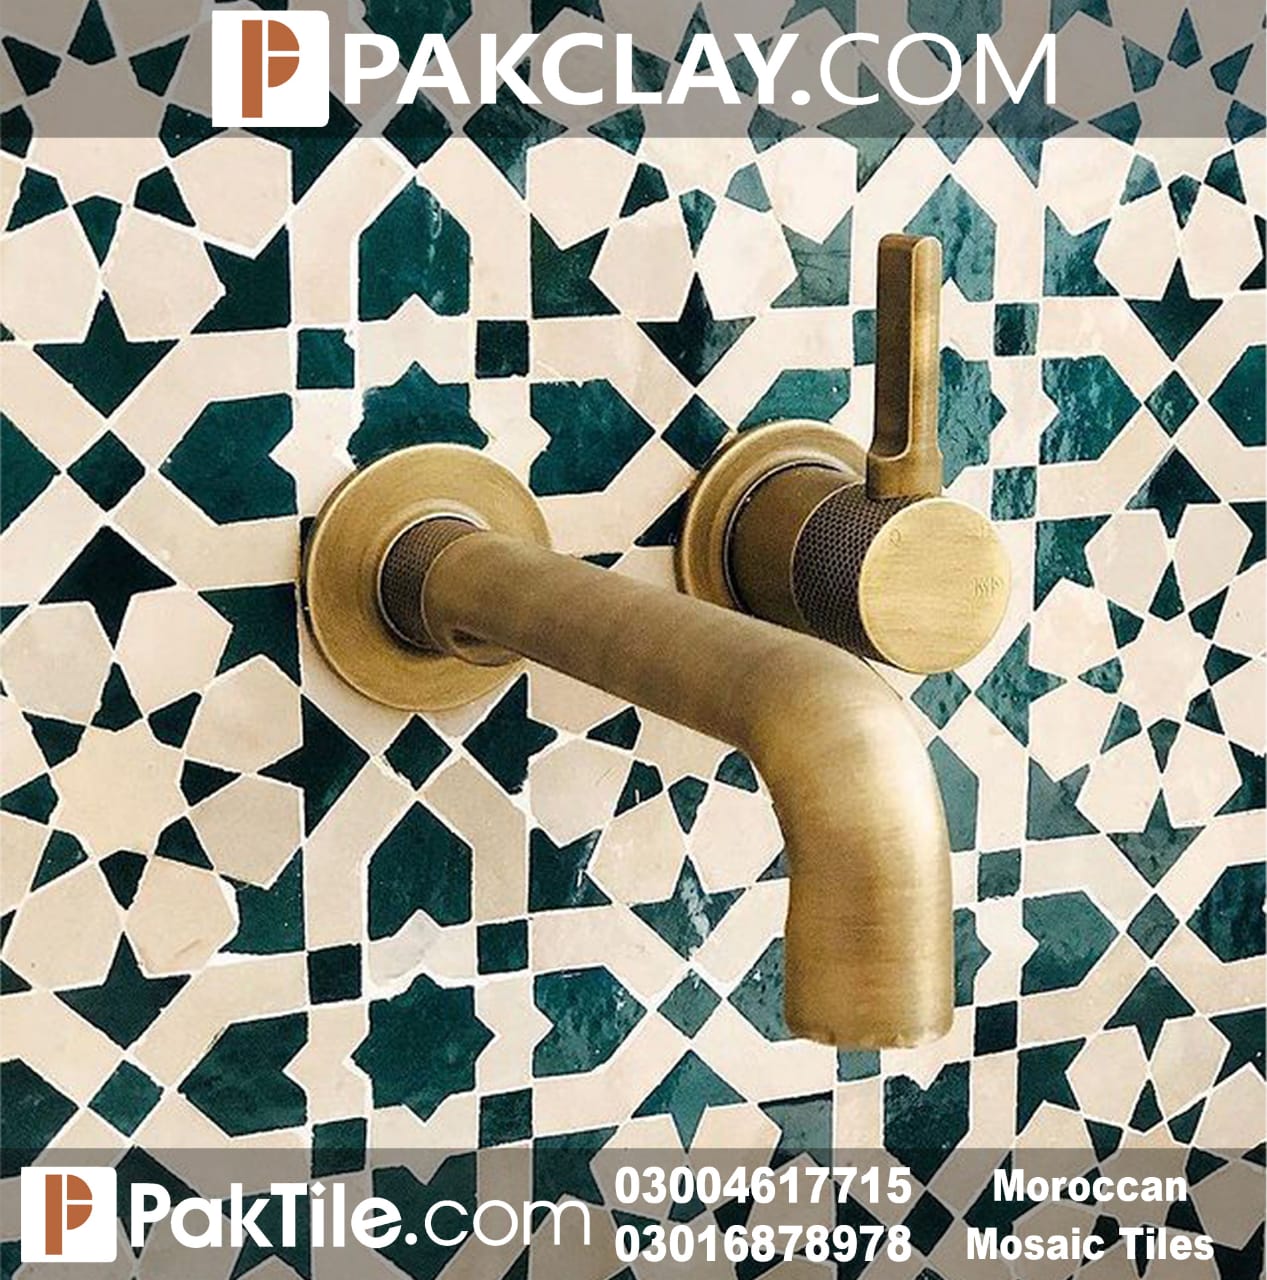 Pak Clay Moroccan Mosaic Tiles Pakistan